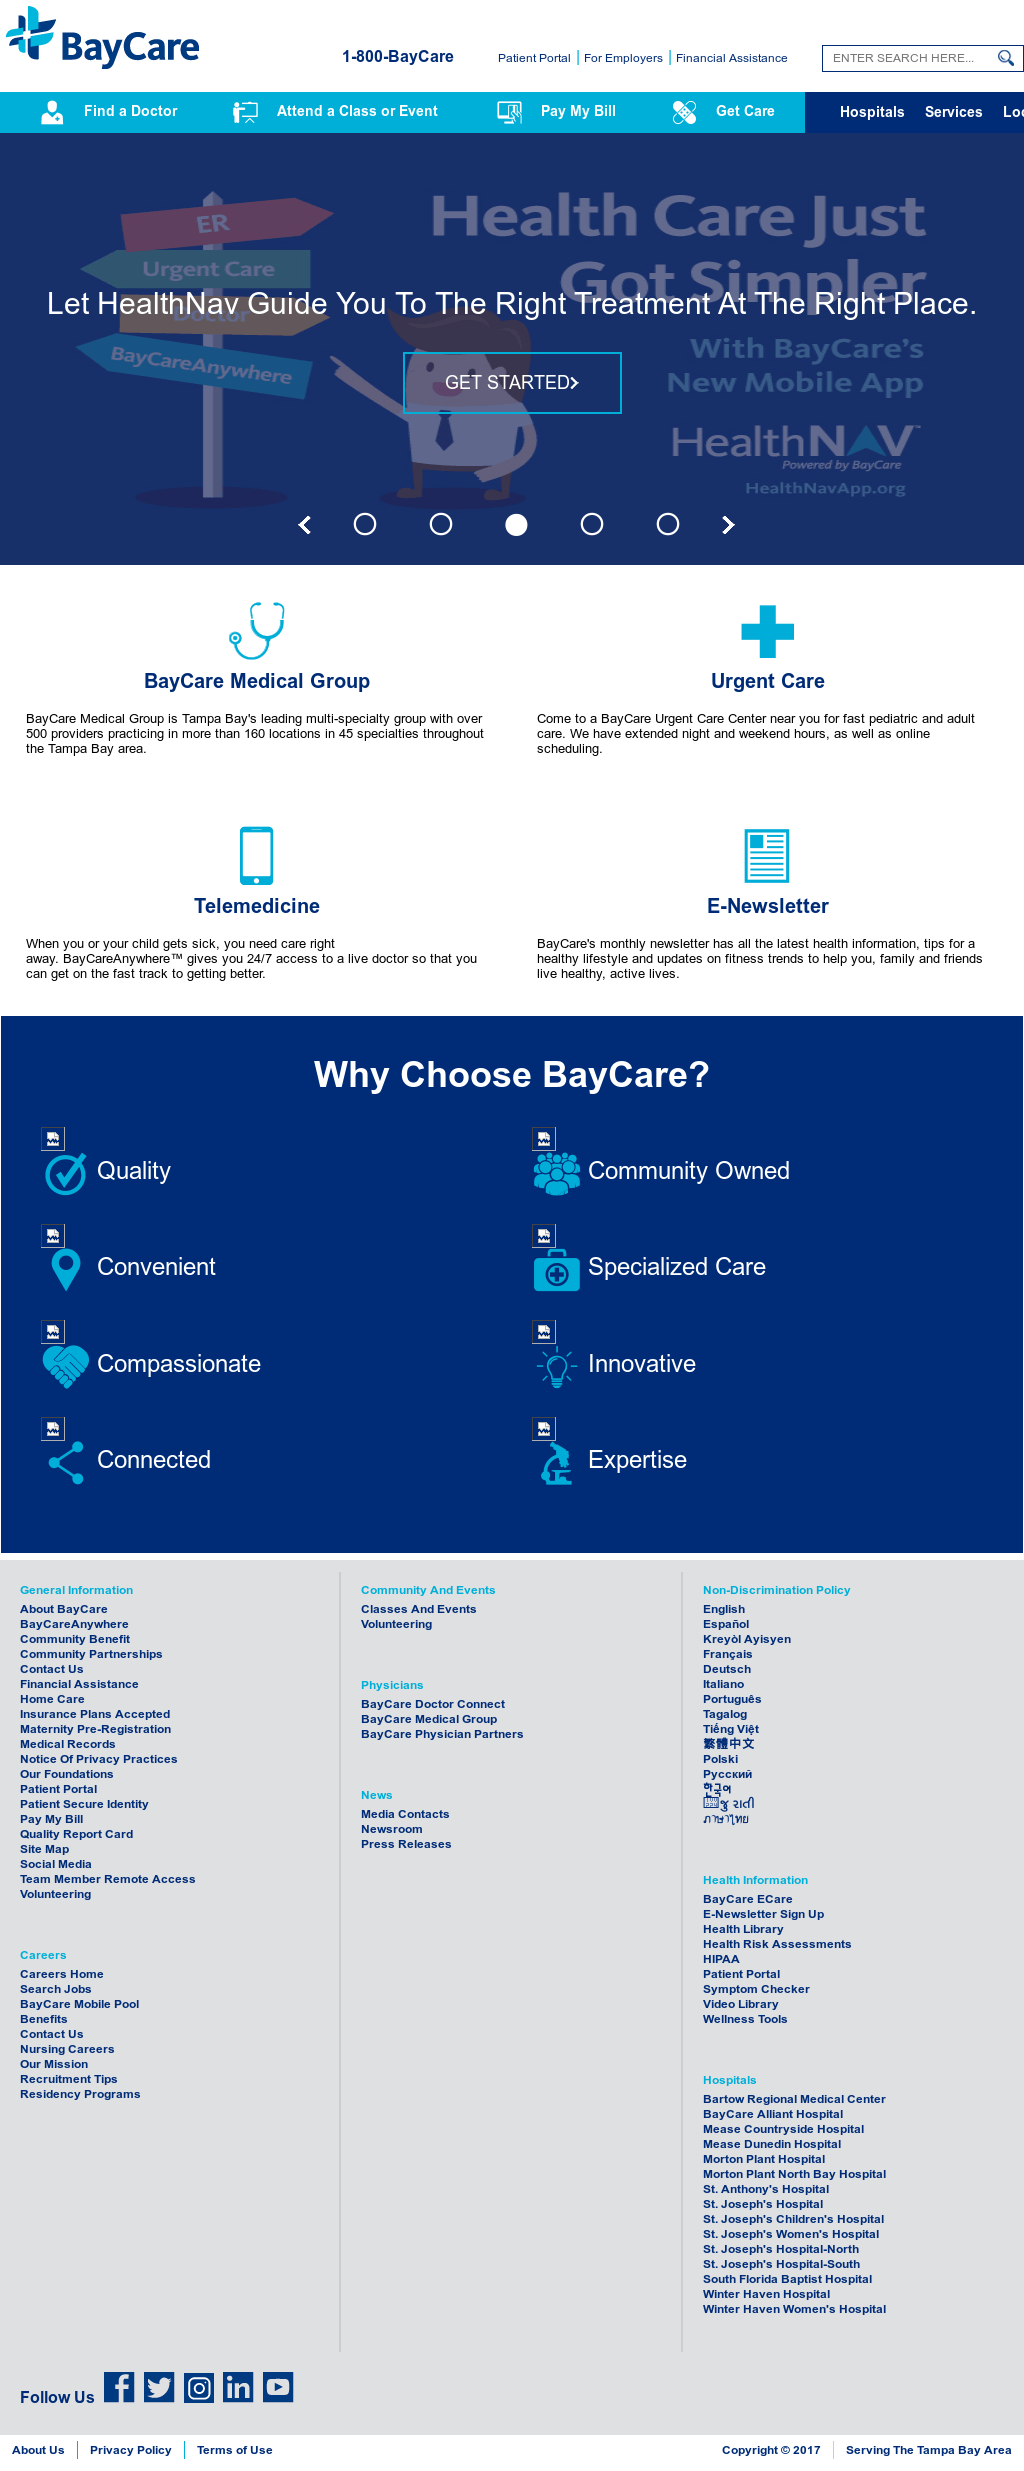 BayCare Logo - BayCare Competitors, Revenue and Employees Company Profile